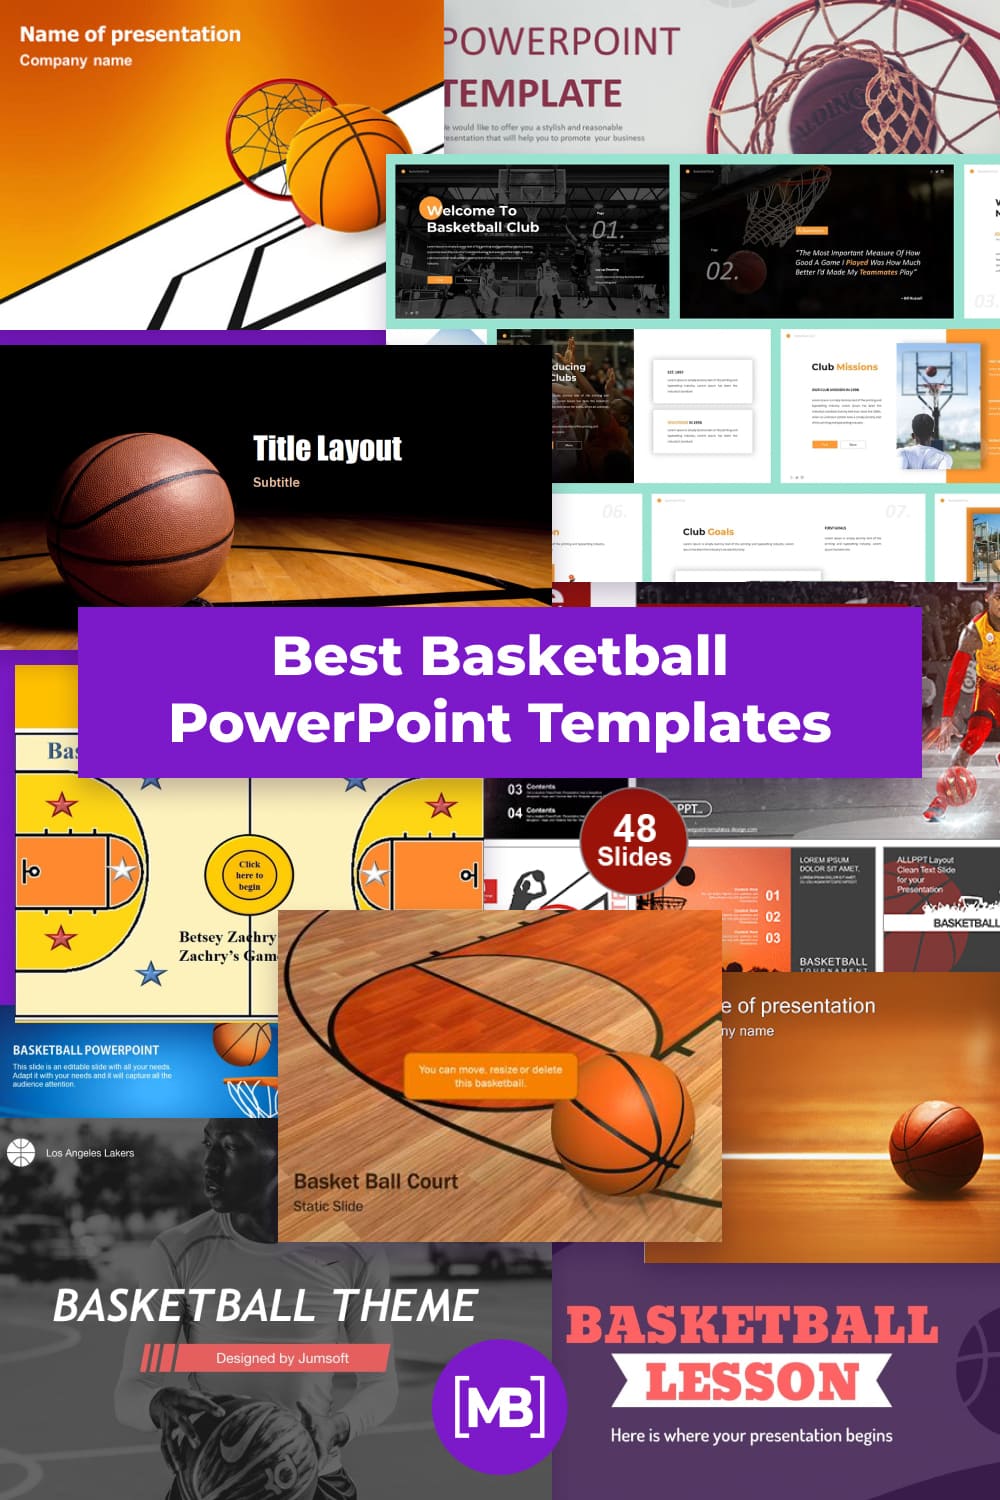 Basketball PowerPoint Templates Pinterest.